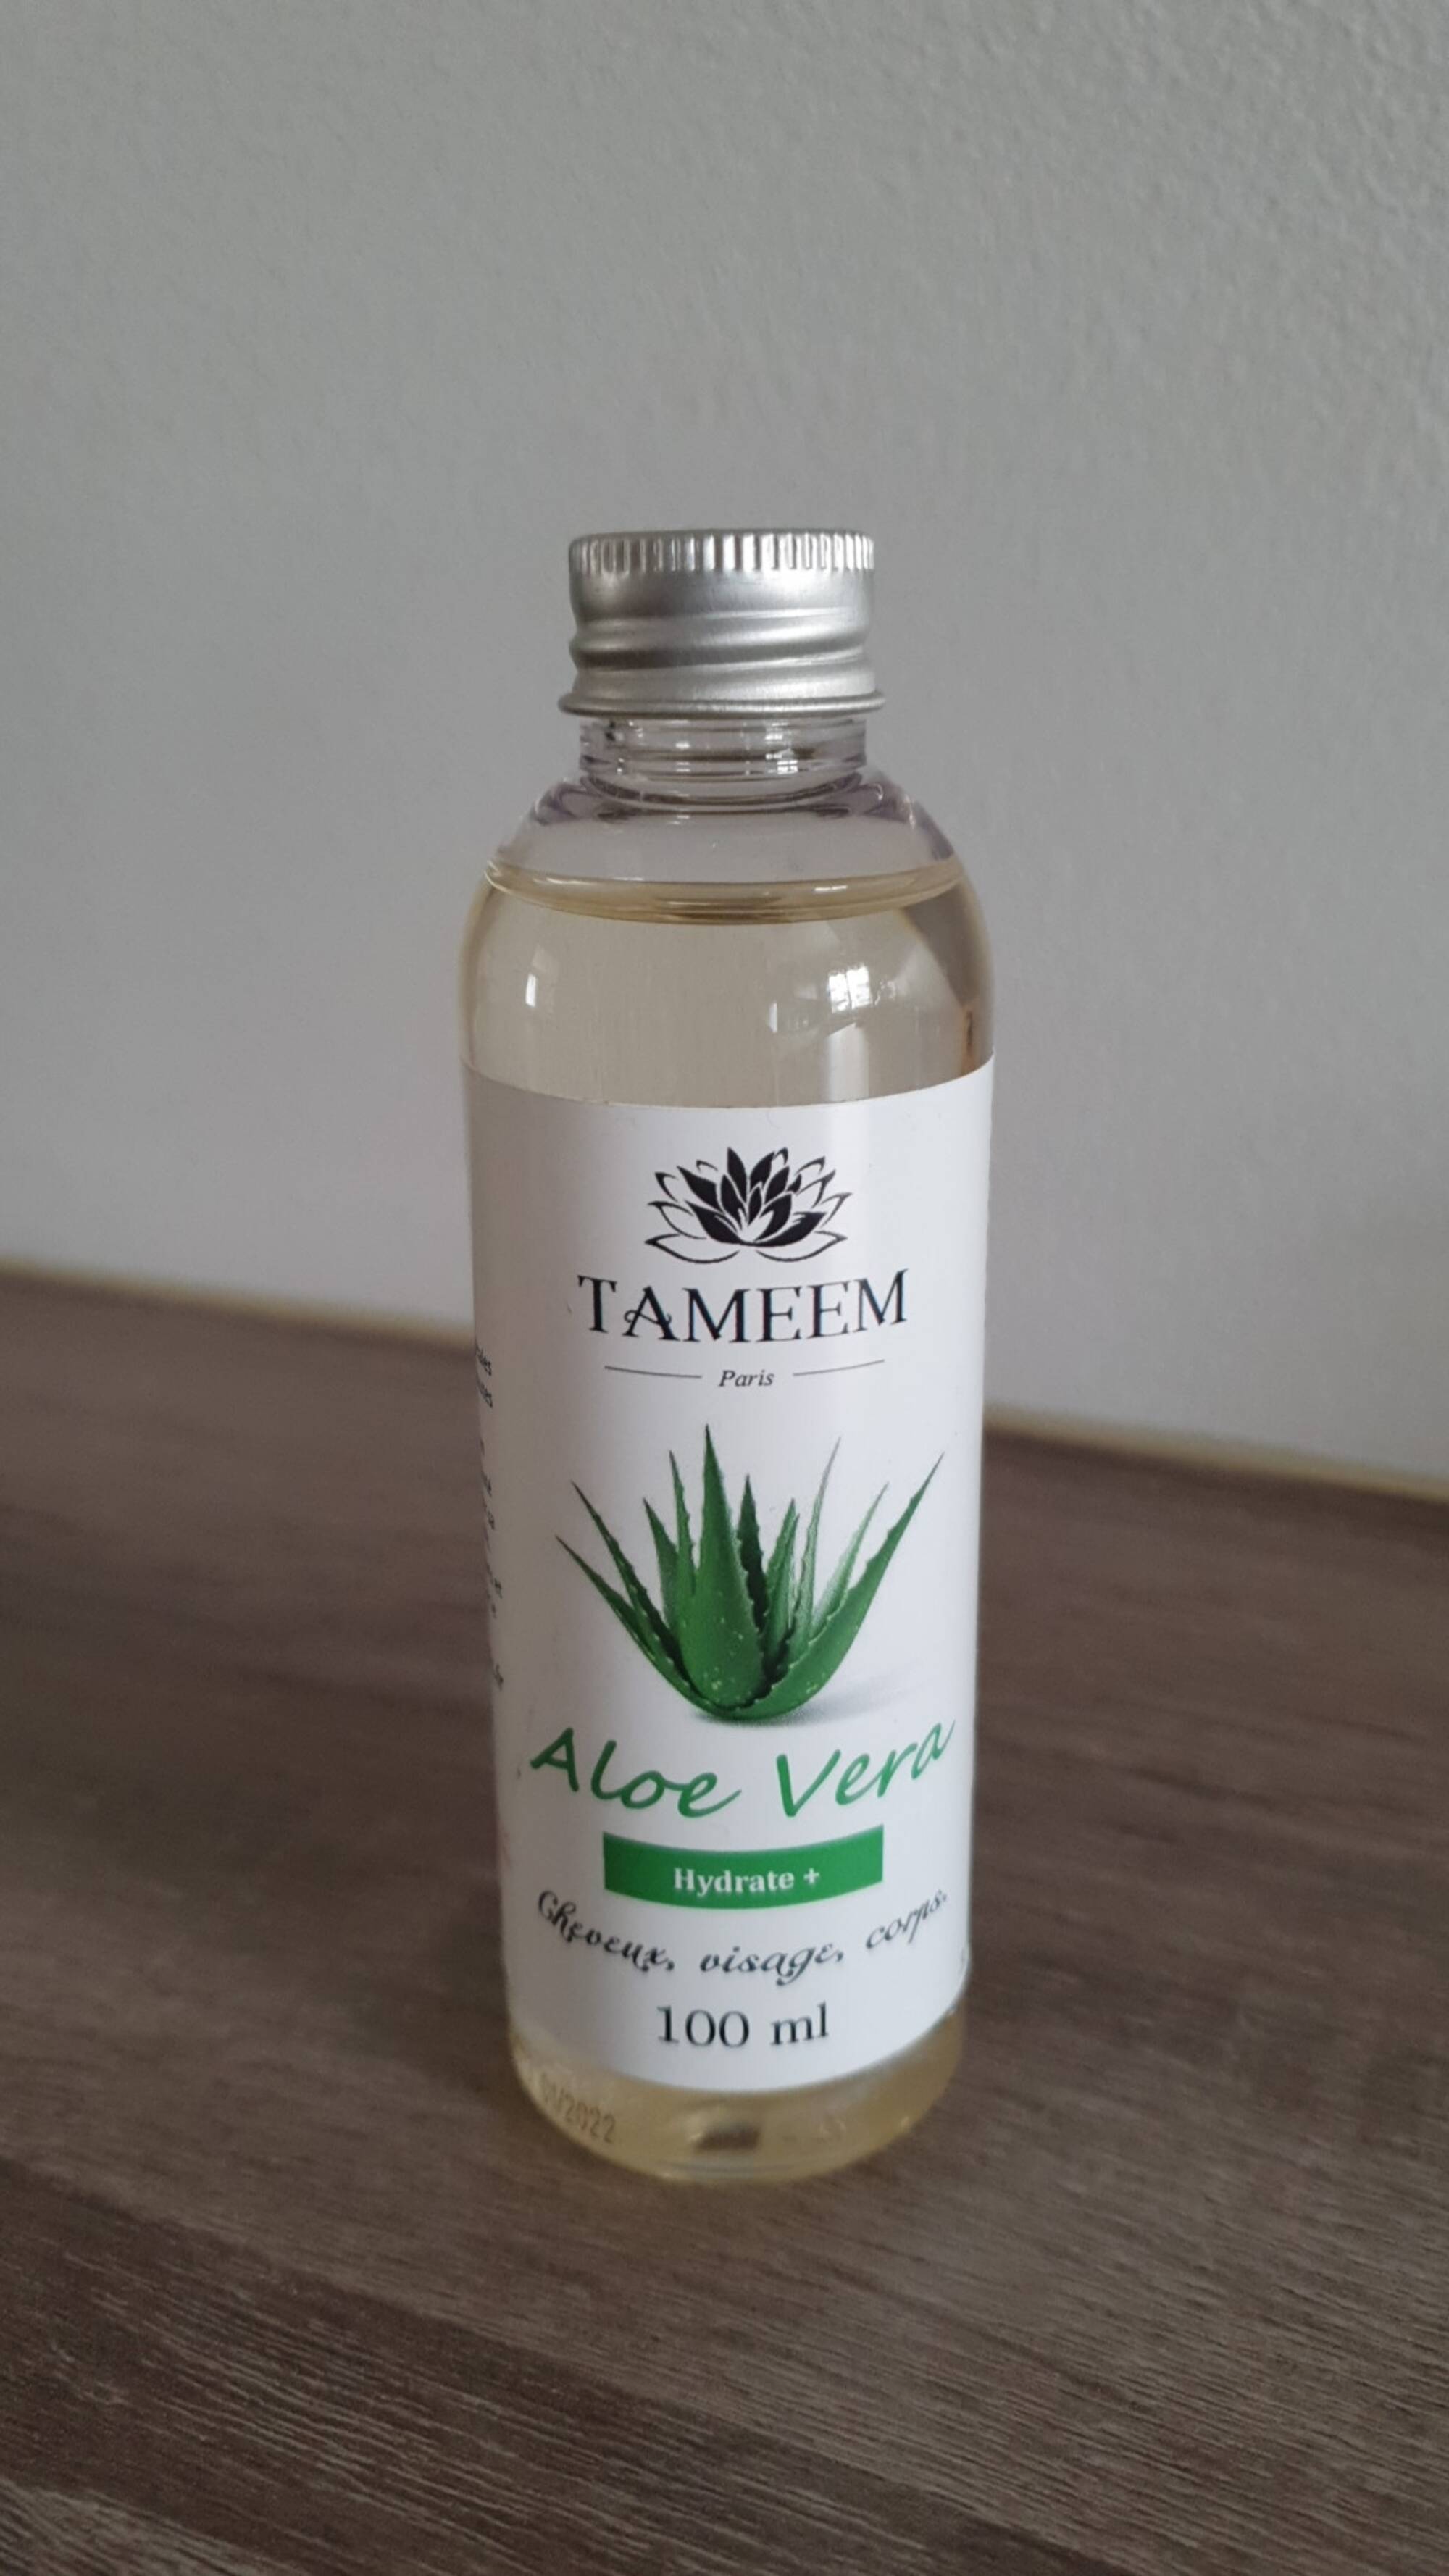 TAMEEM - Aloe vera hydrate+